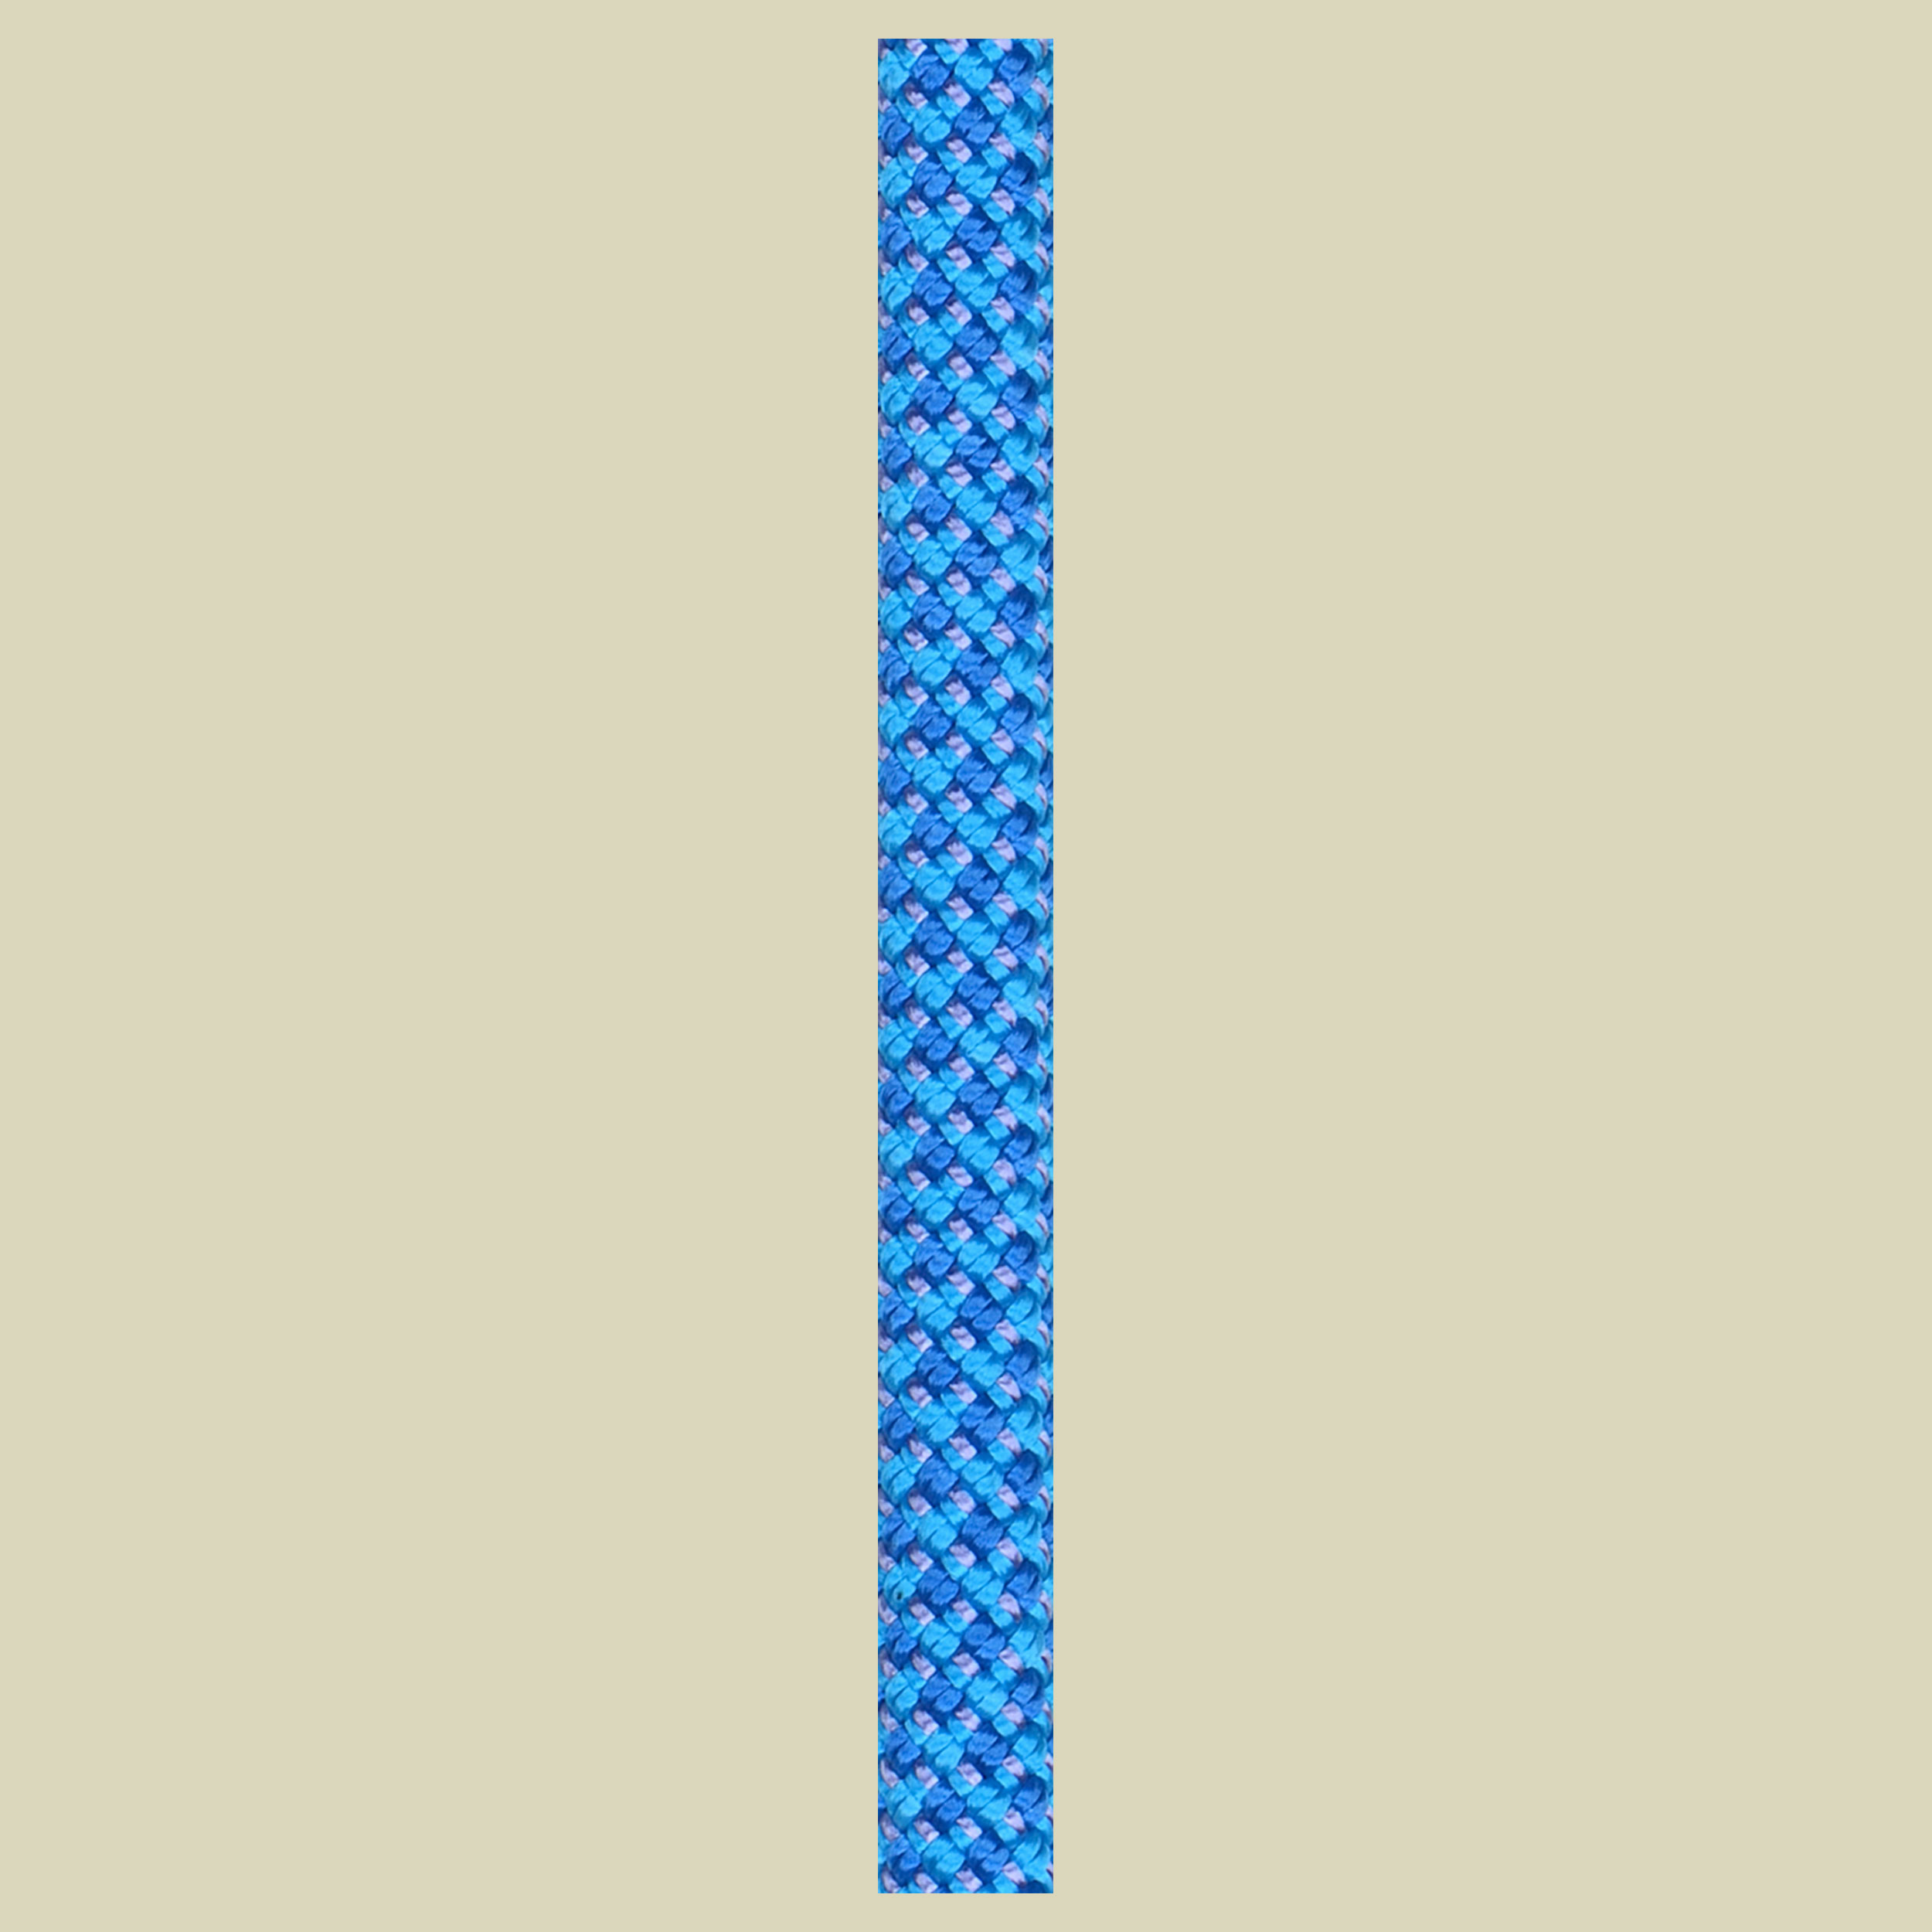 Joker 9.1 mm Golden Dry Länge 60 m Farbe blue